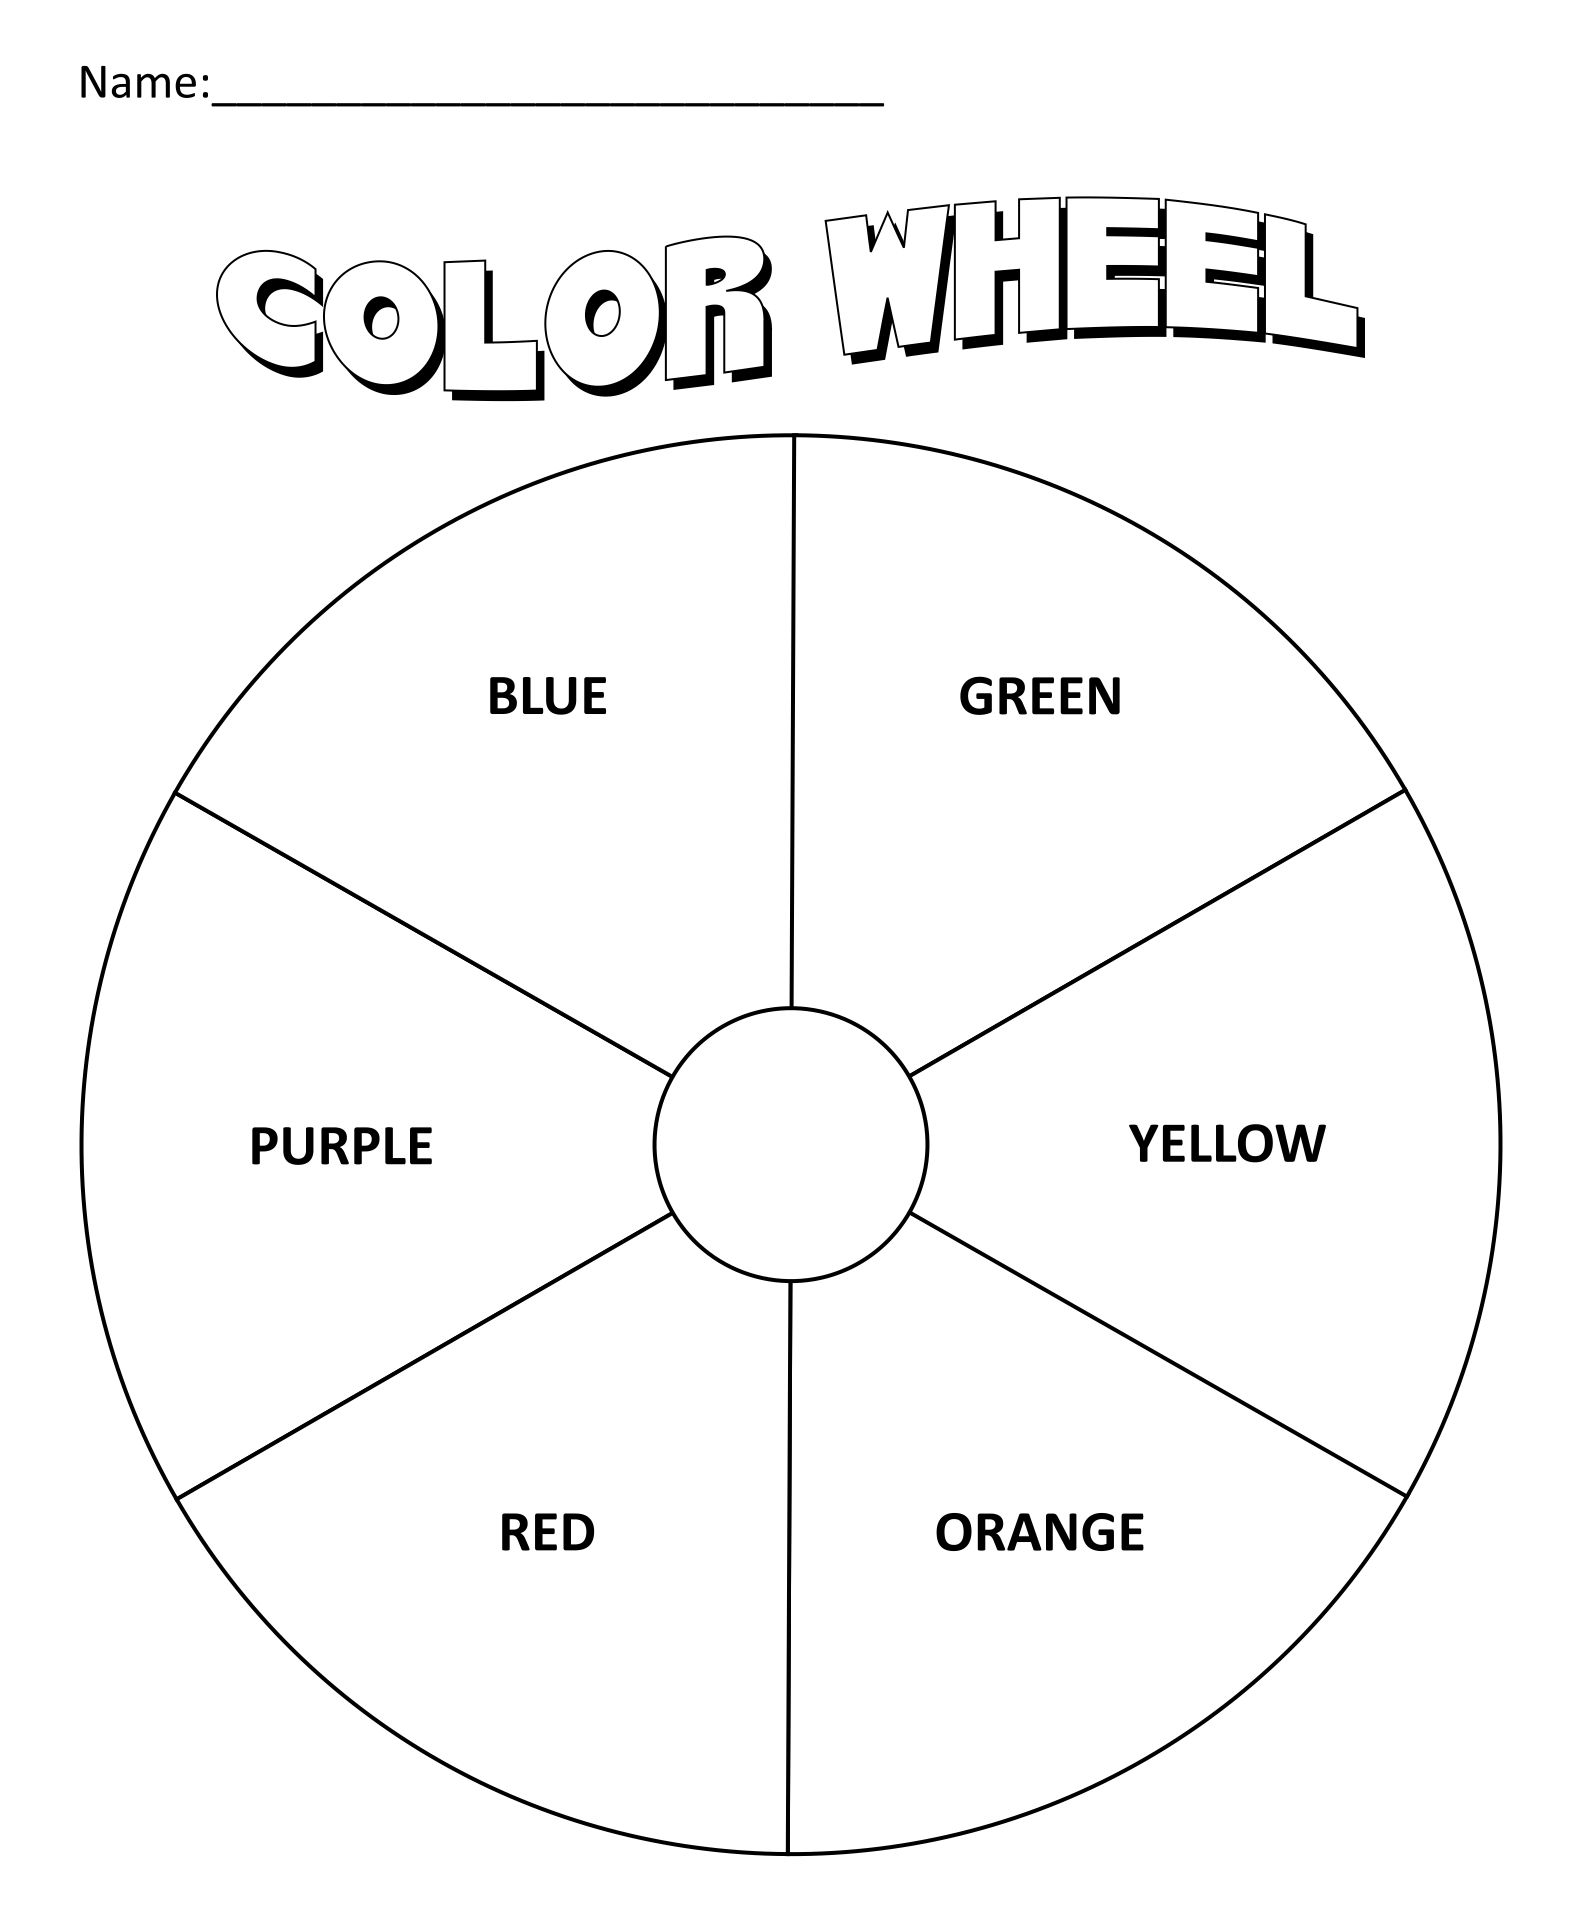 Color Wheel For Students - 10 Free PDF Printables | Printablee